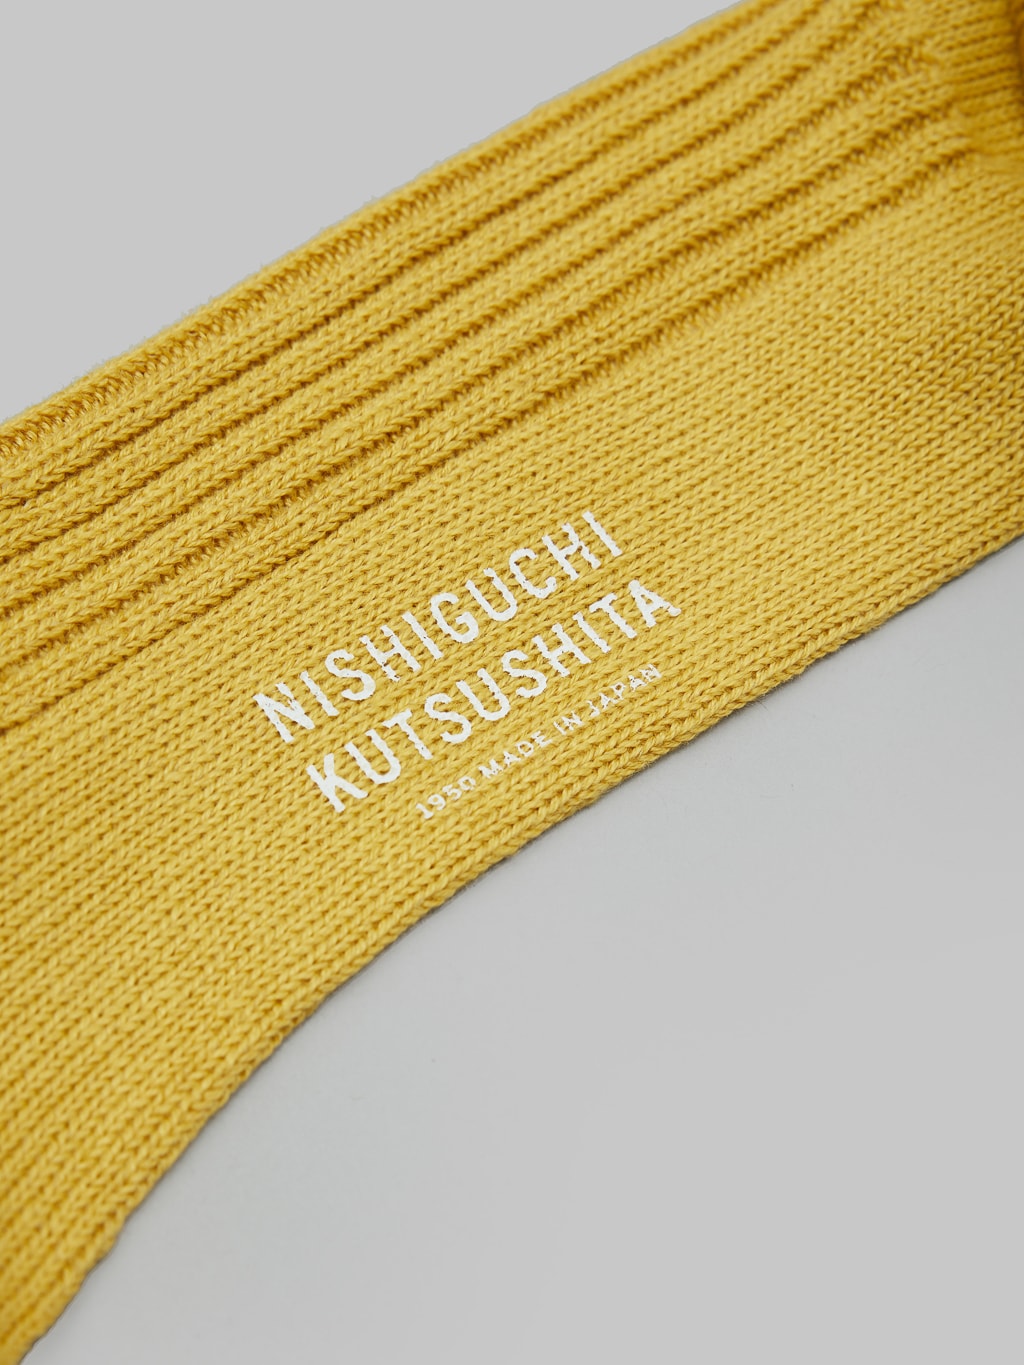 nishiguchi kutsushita linen ribbed socks canary yellow brand stamped logo